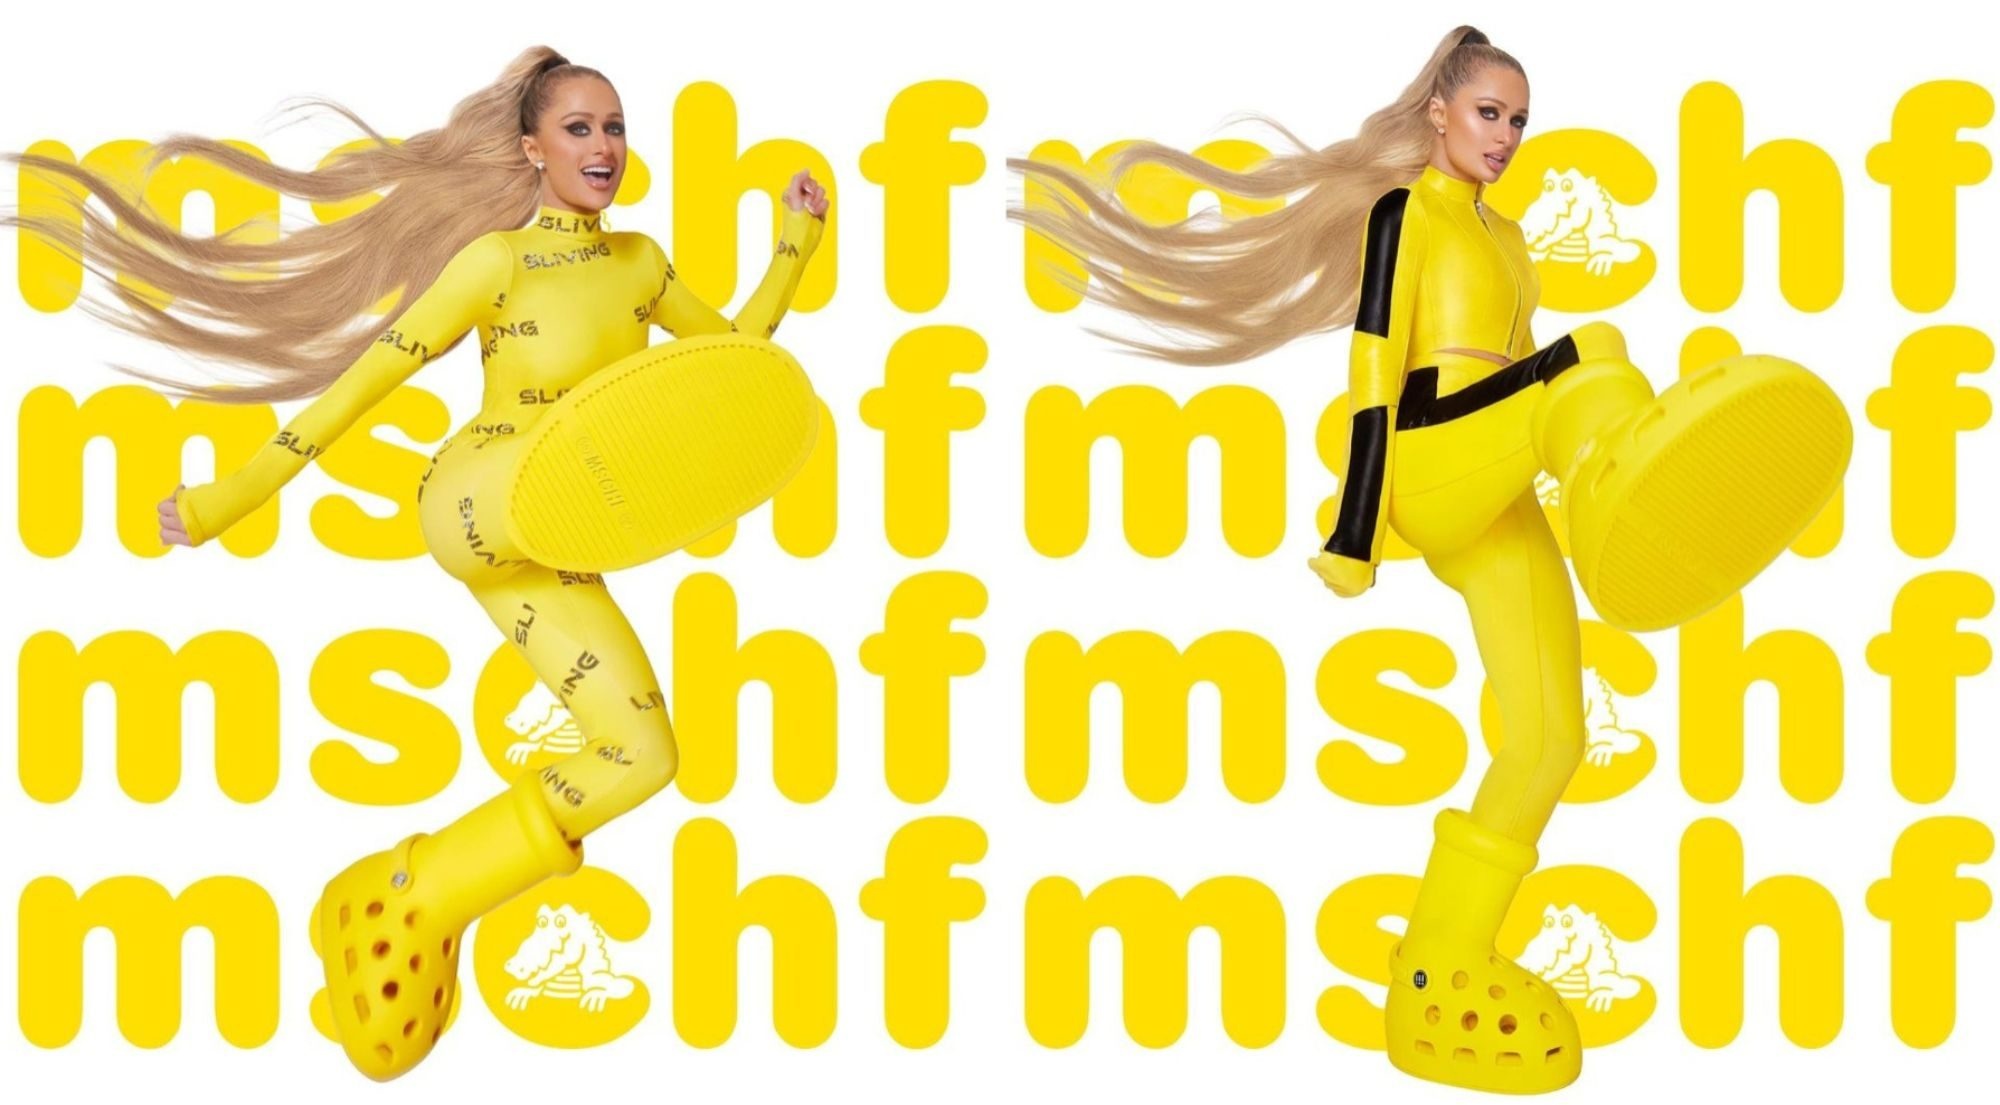 The Mschf x Crocs campaign, starring Paris Hilton. Photo: Mschf